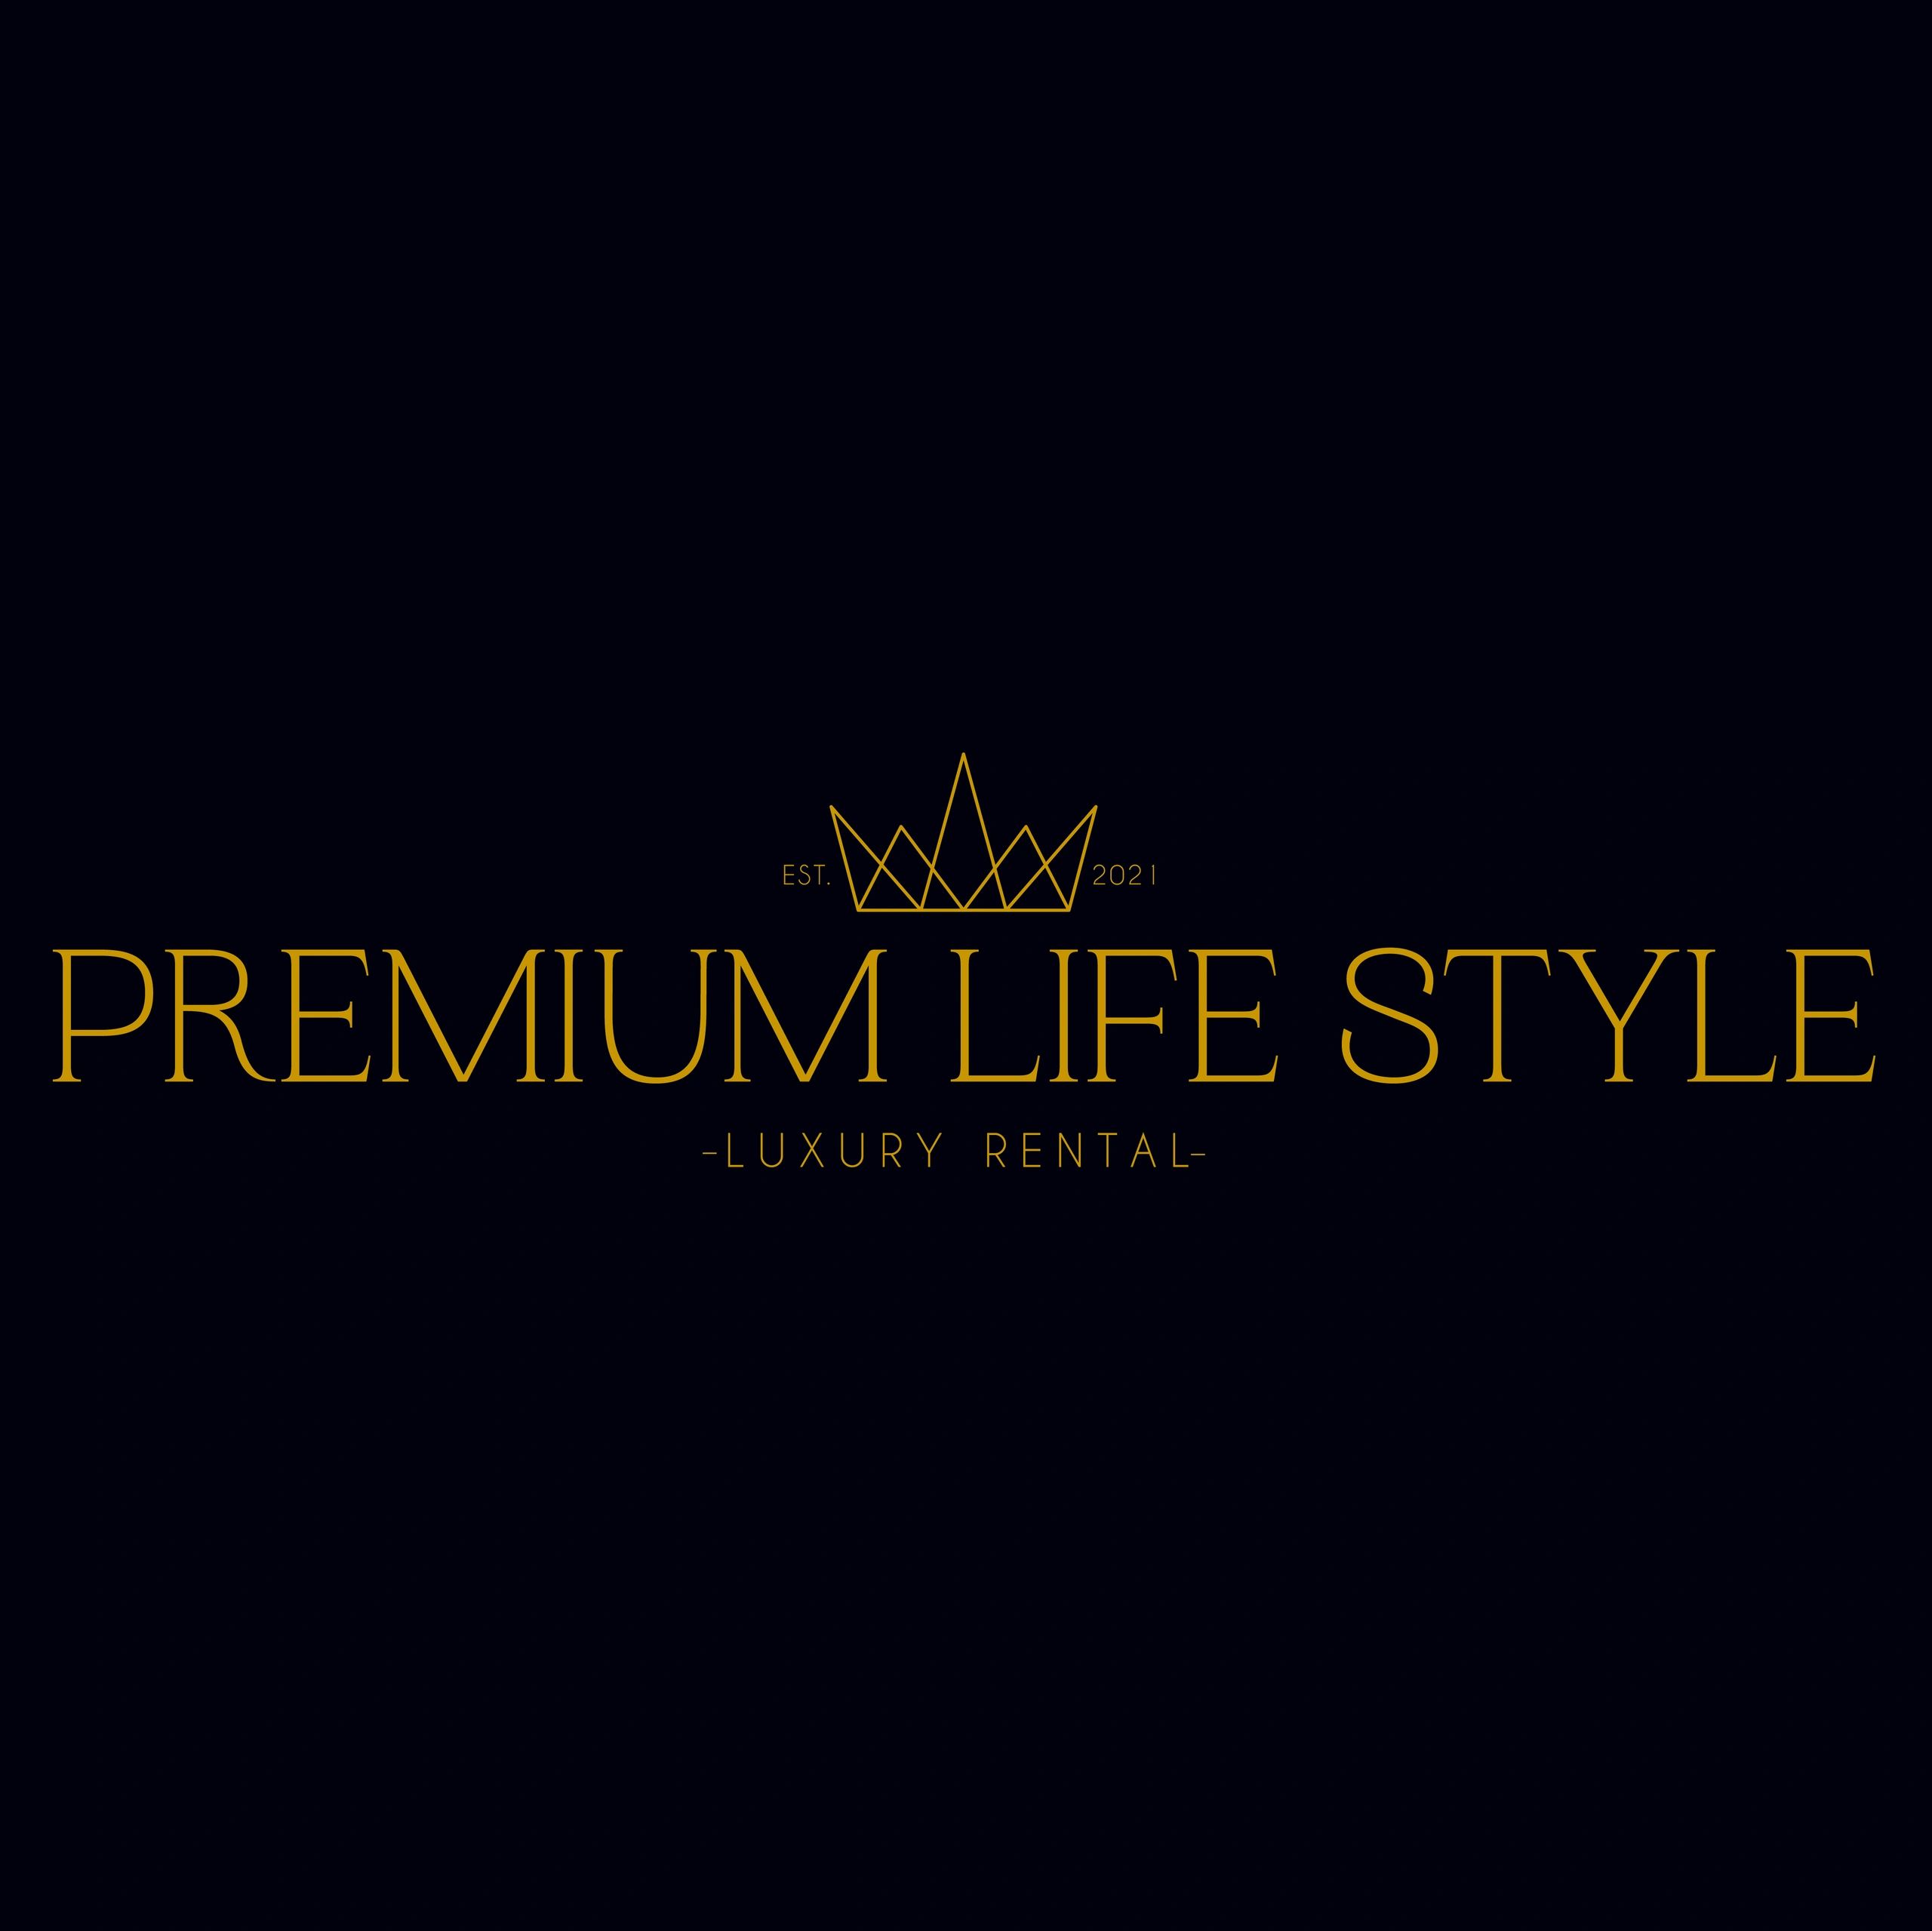 Premium Life Style - Car Rental, Luxury Cars, Luxury Suv